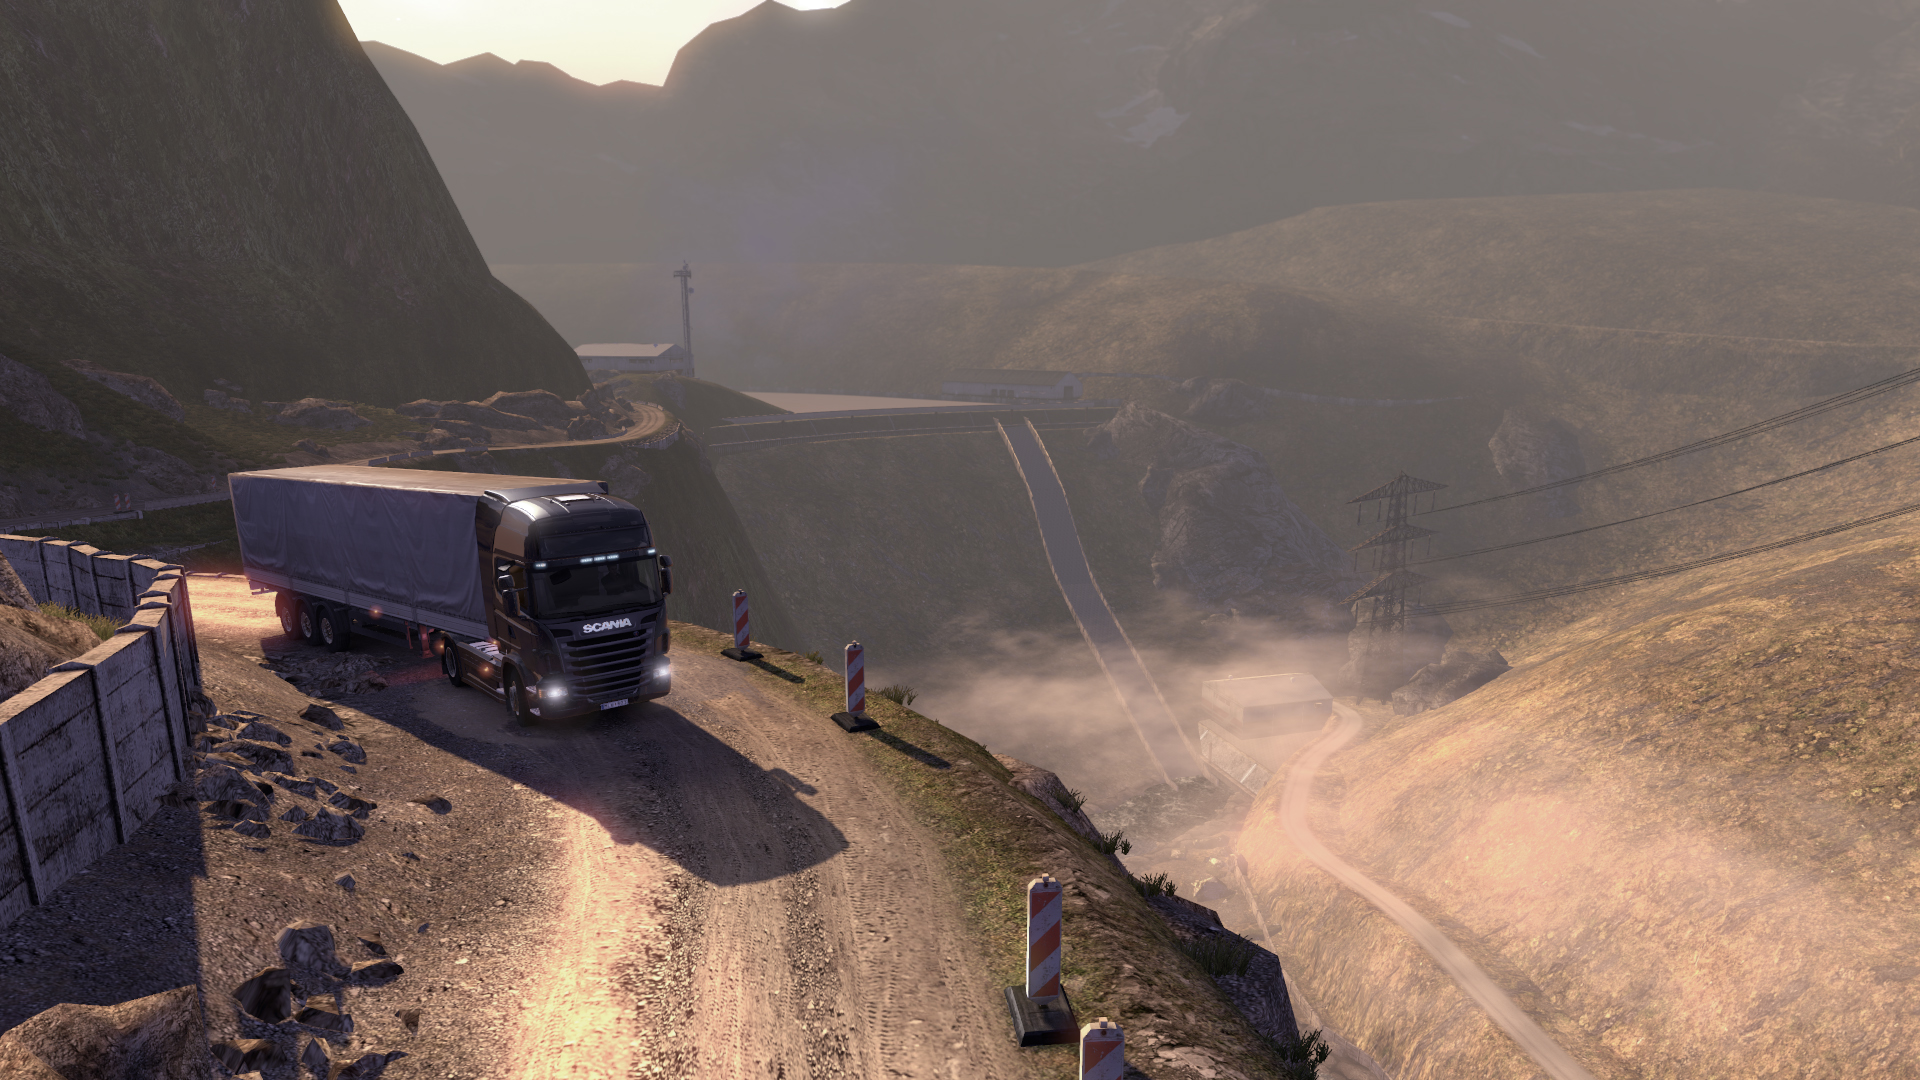 scania truck driving simulator free download full version